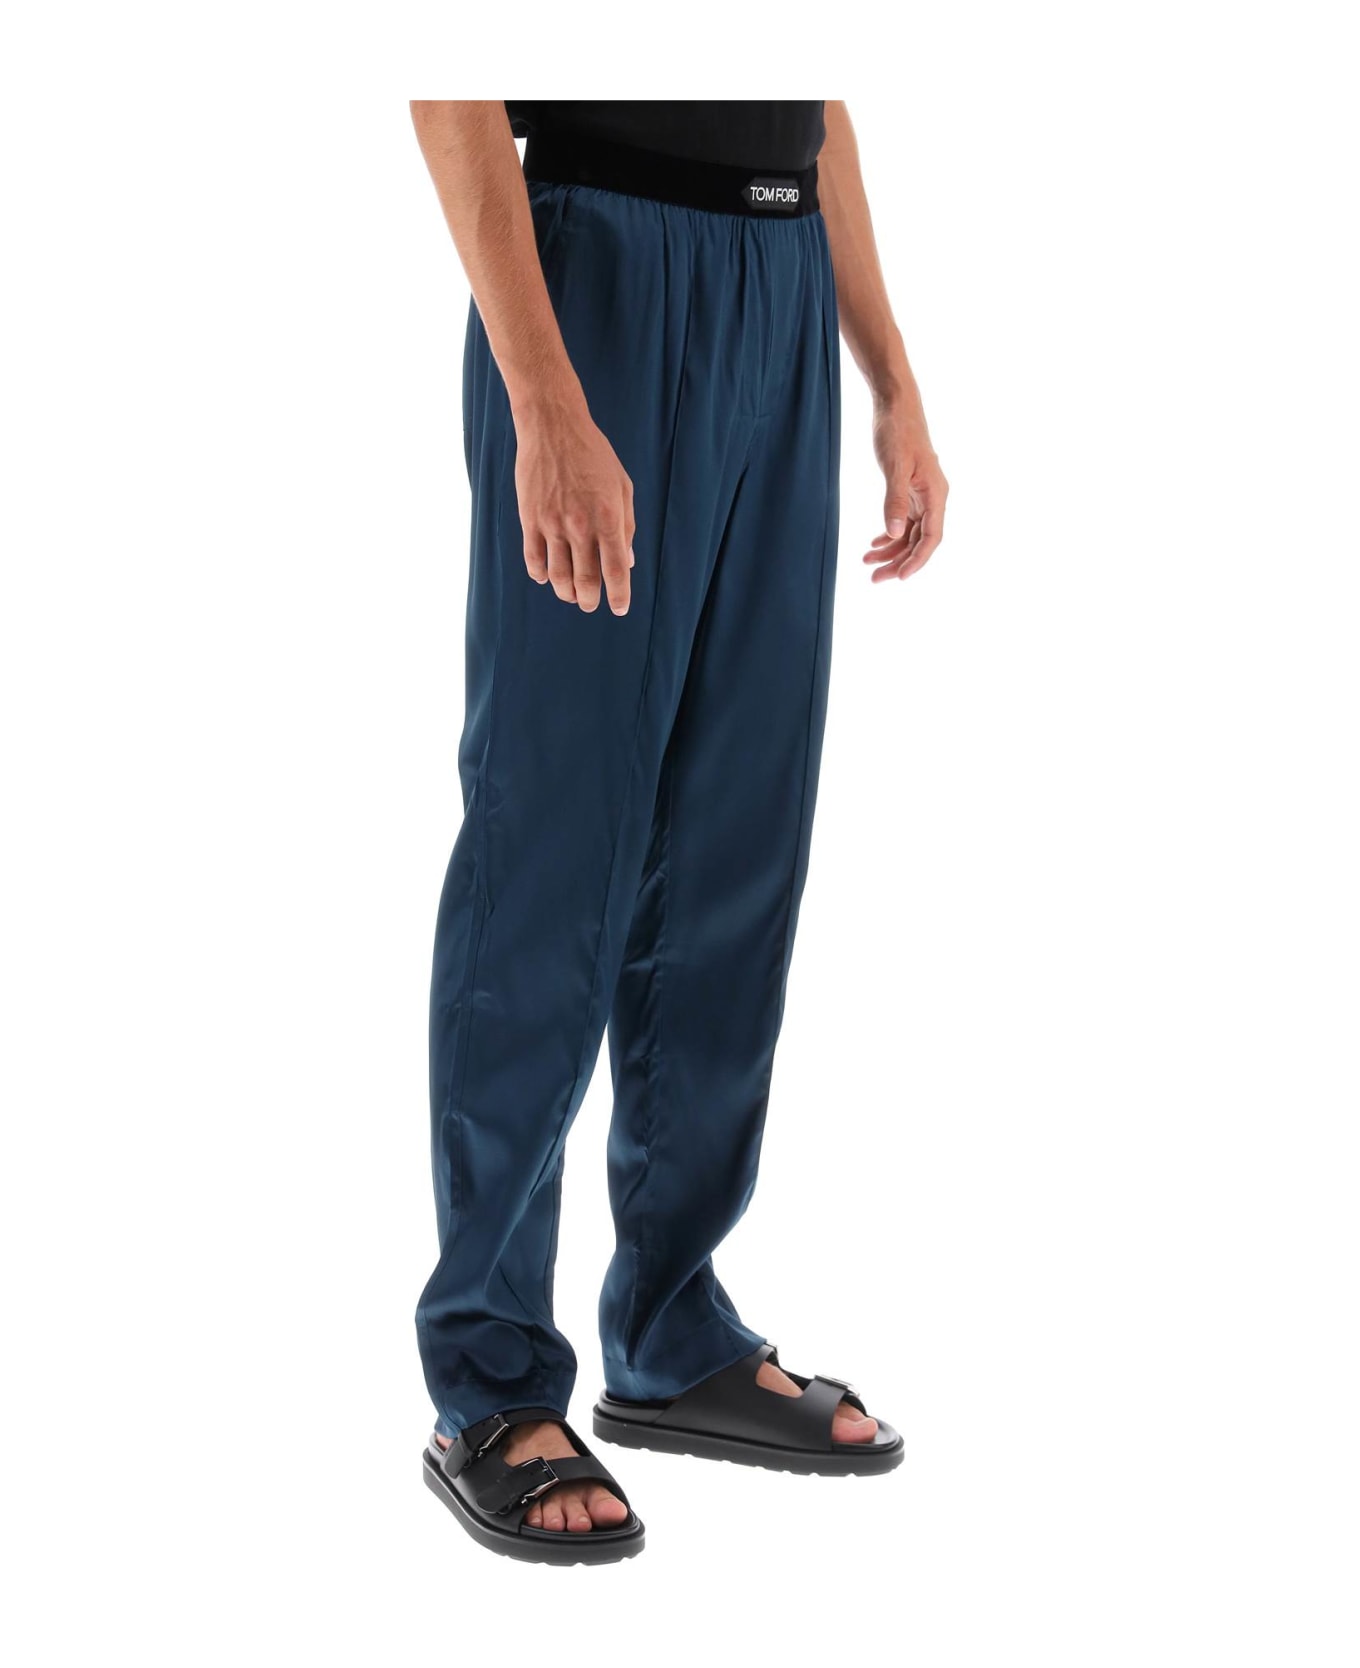 Tom Ford Silk Pajama Pants - DEEP OCEAN (Blue) ボトムス